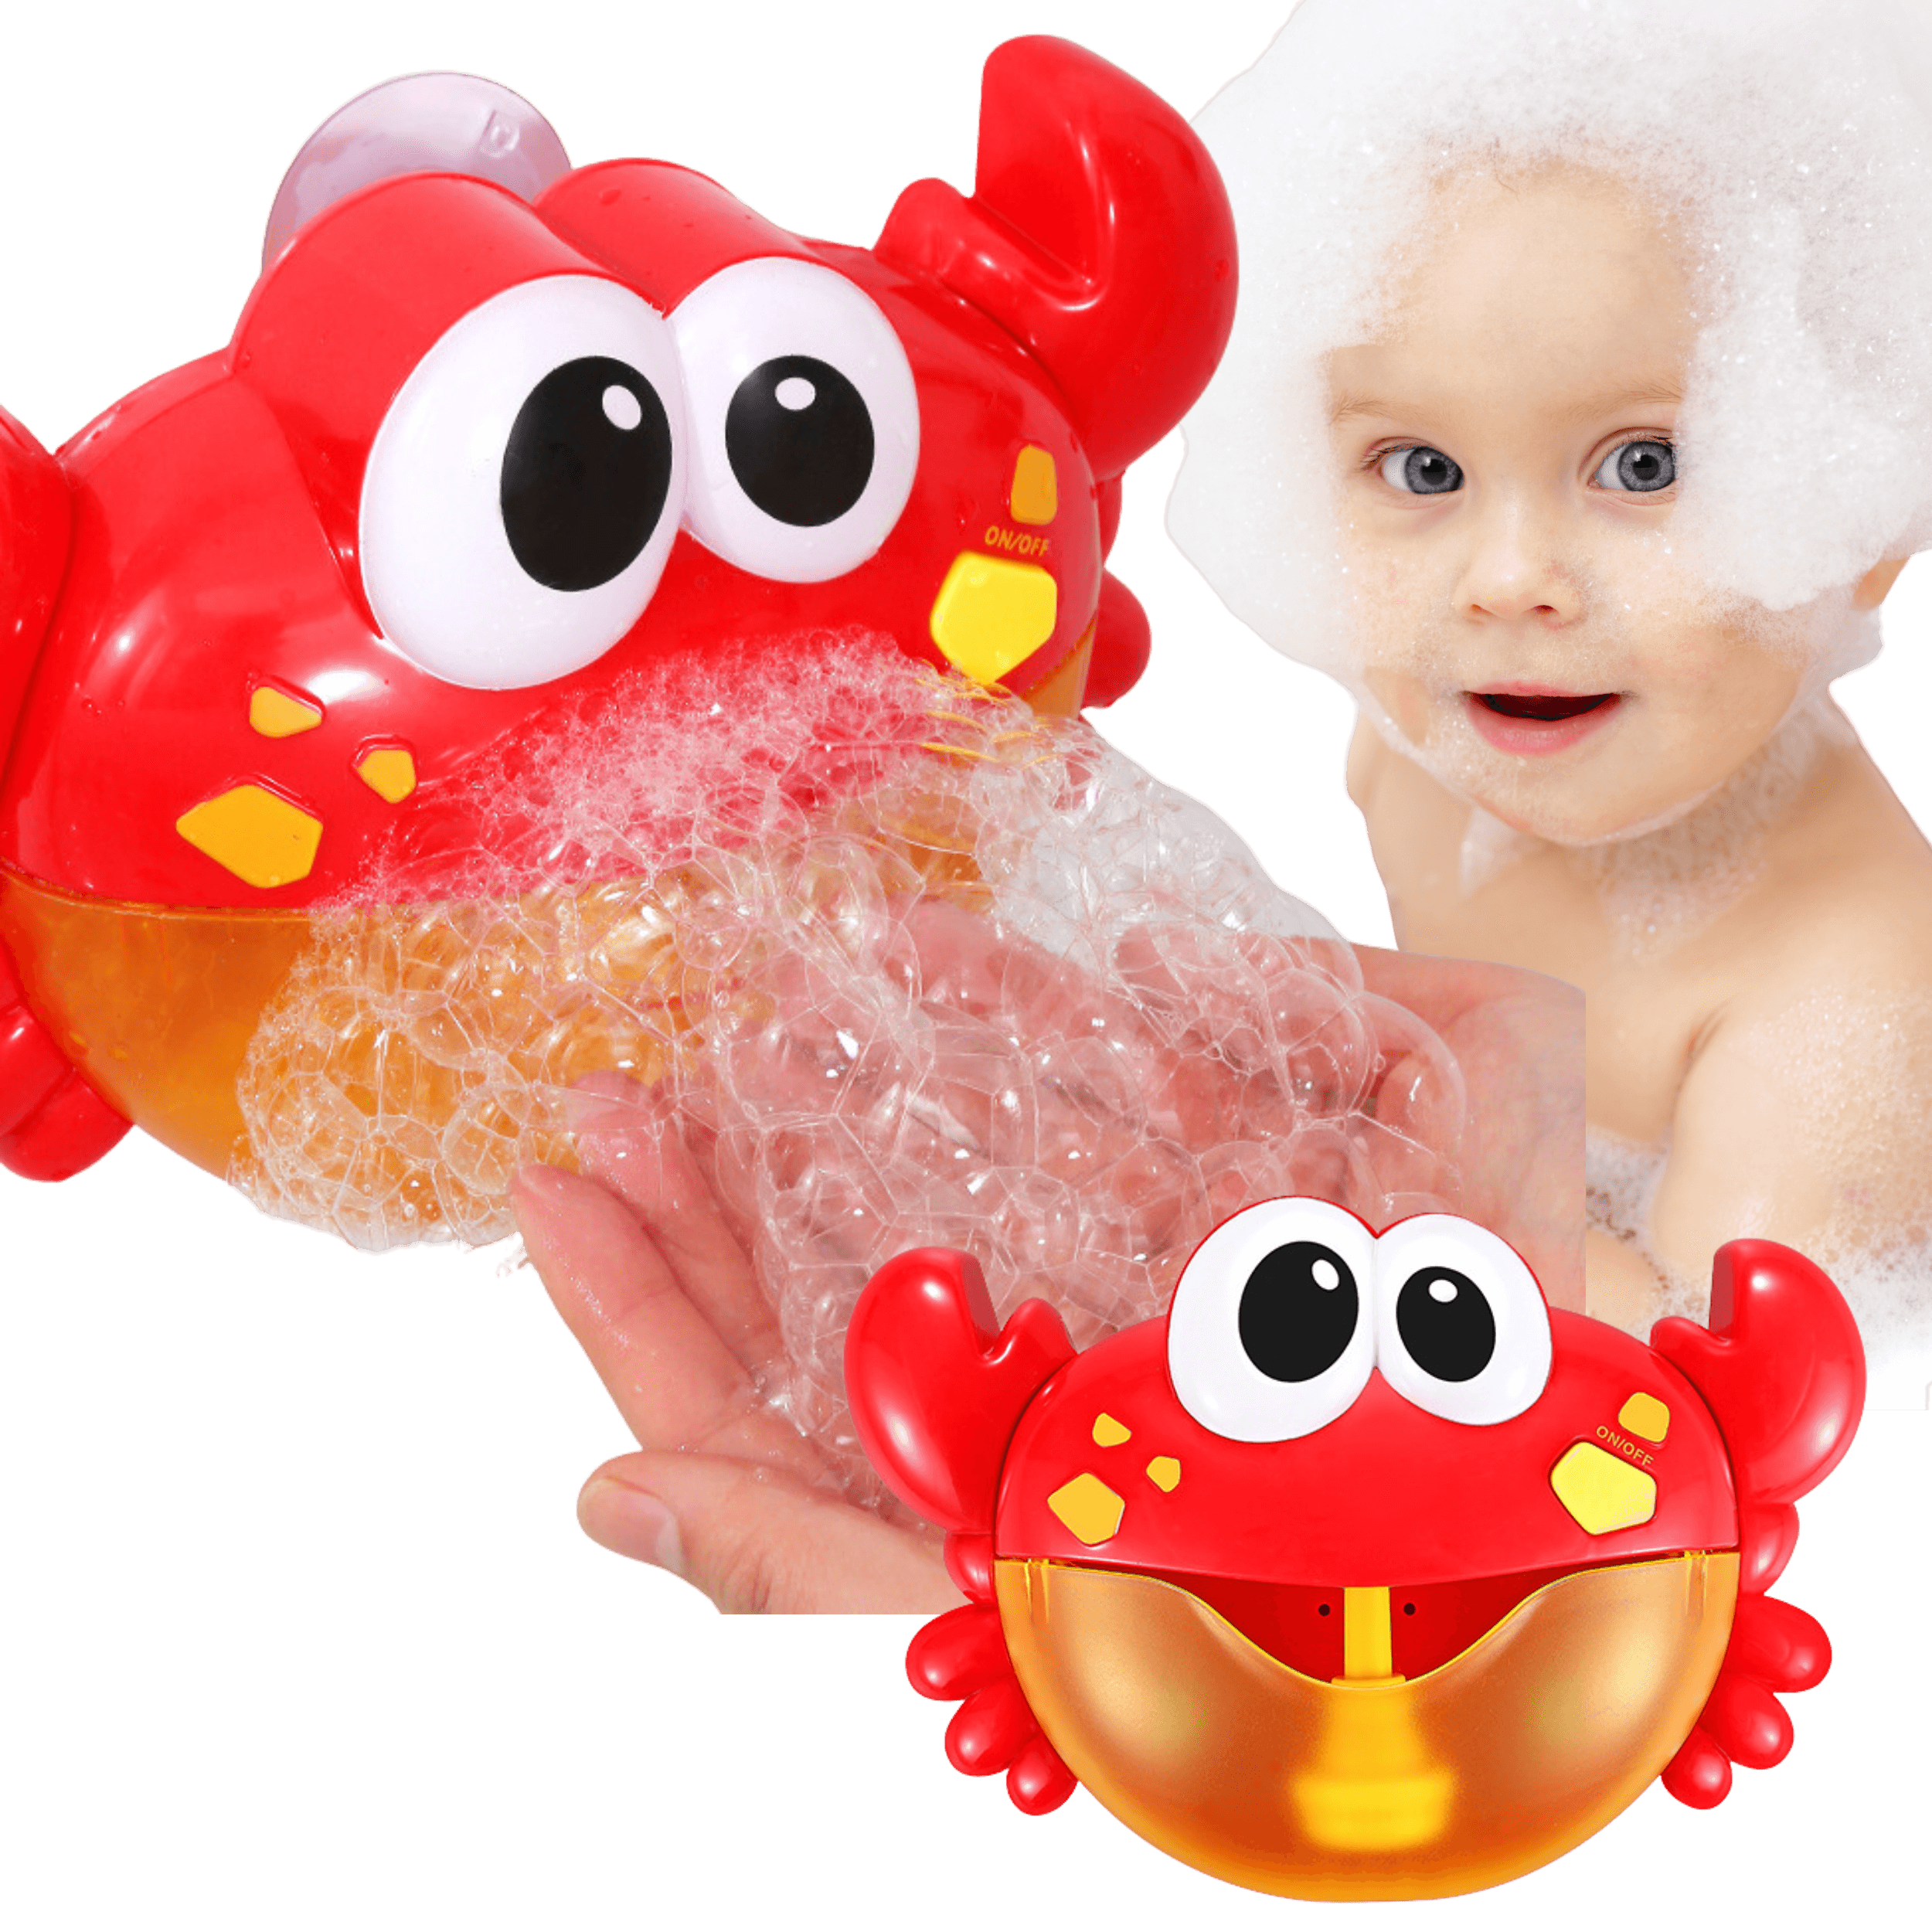 Foam maker in the bathtub - crab